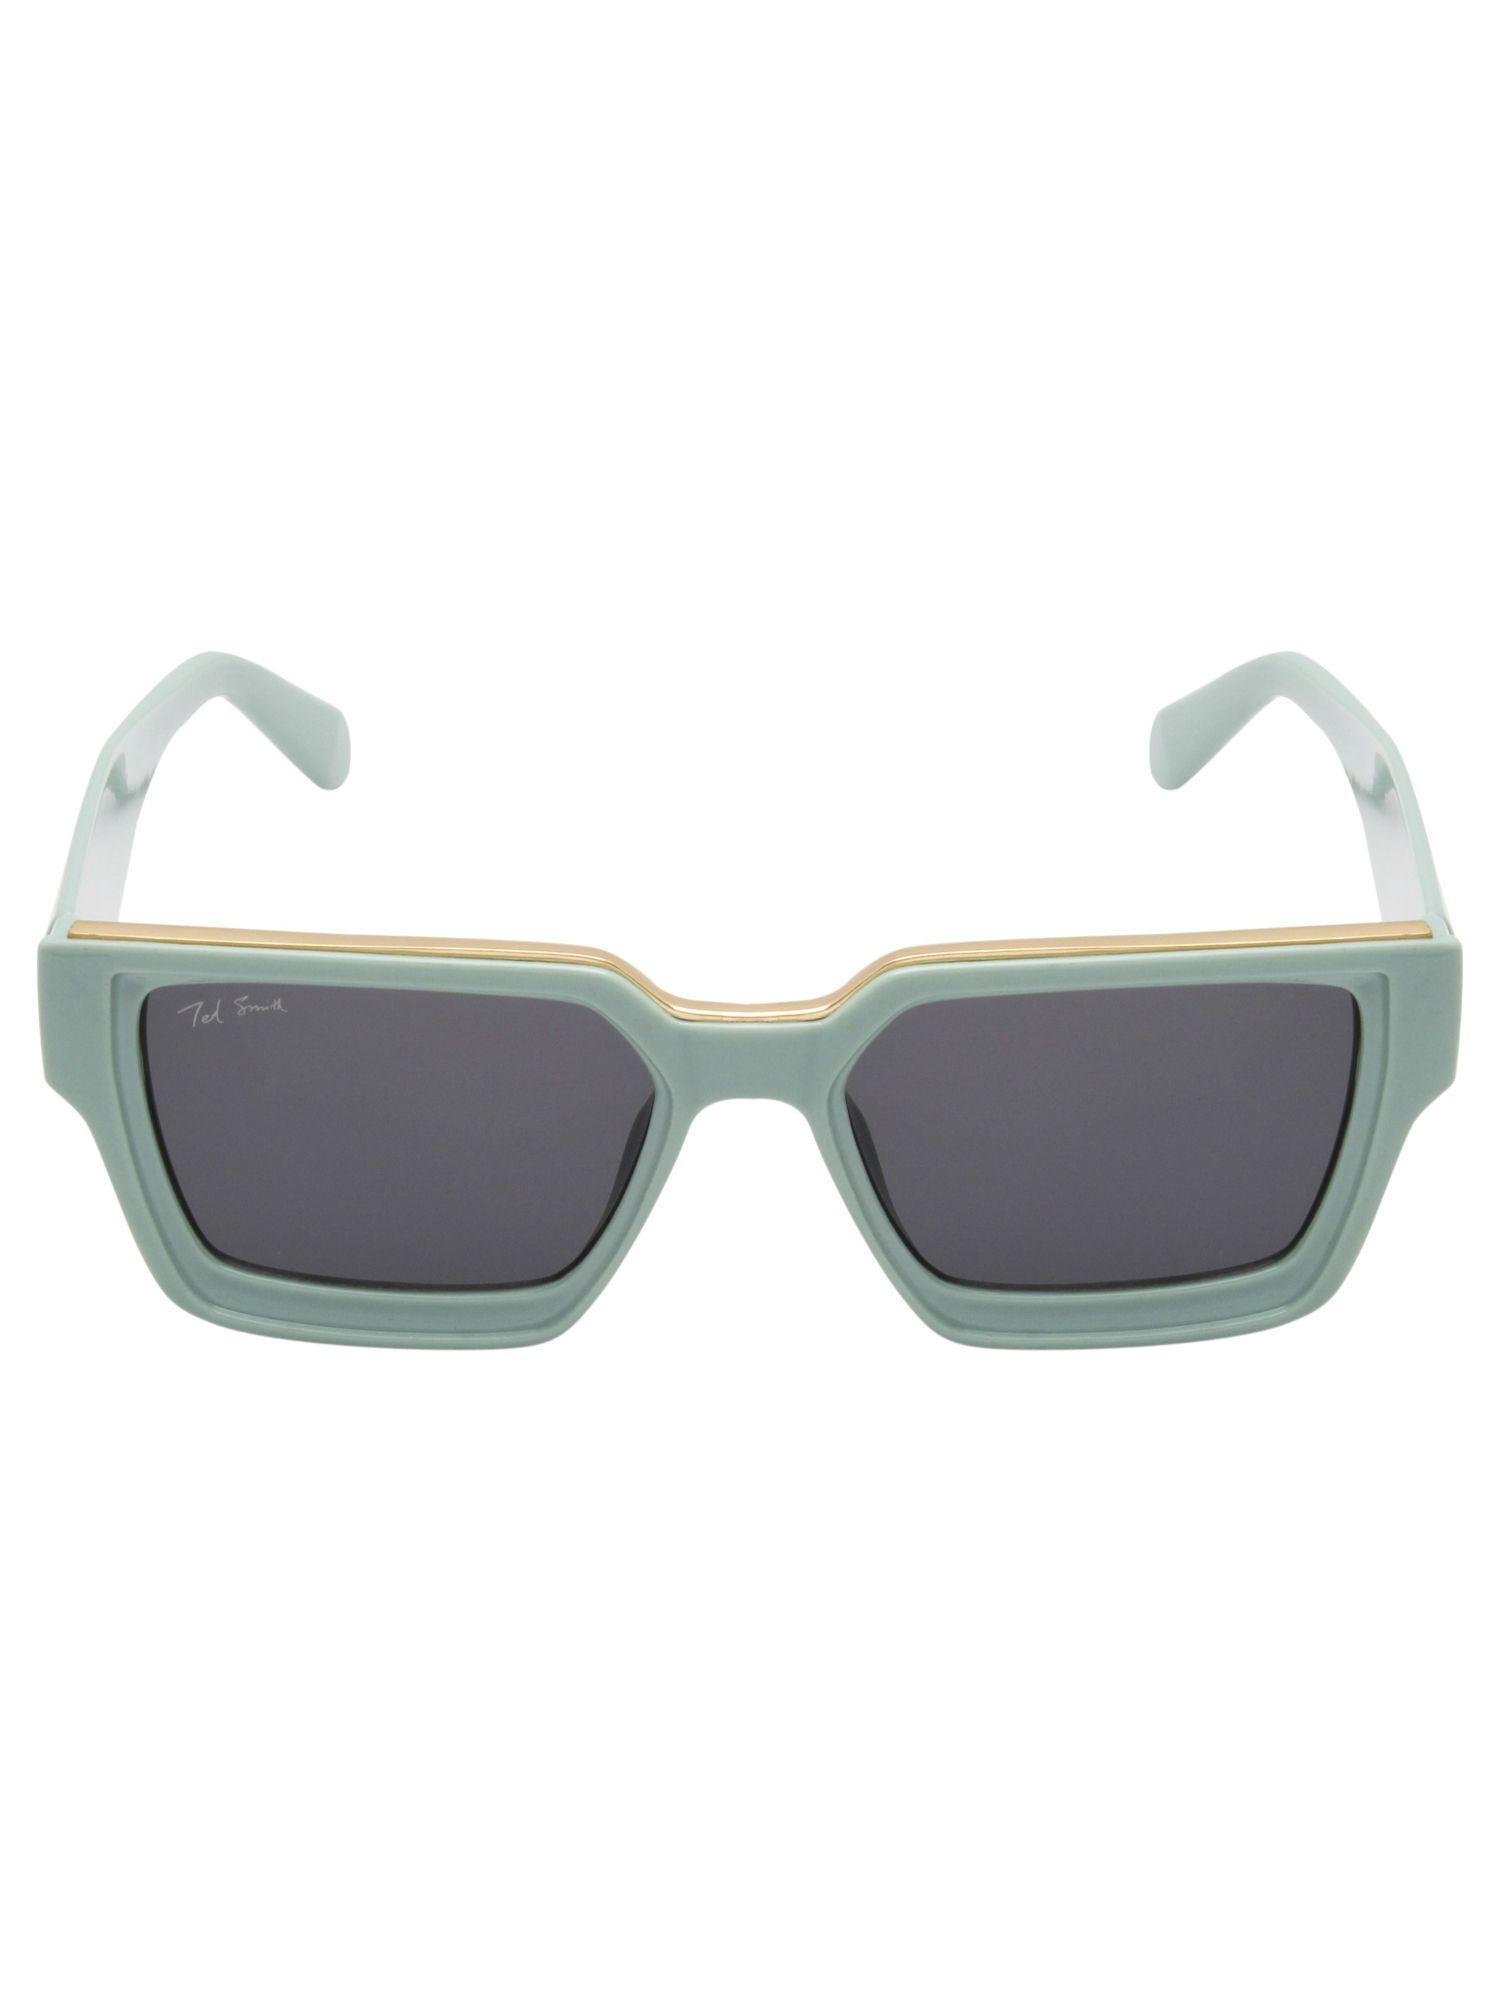 full rim uv protection sunglasses for men and women stylish trending fashion youme2_c3